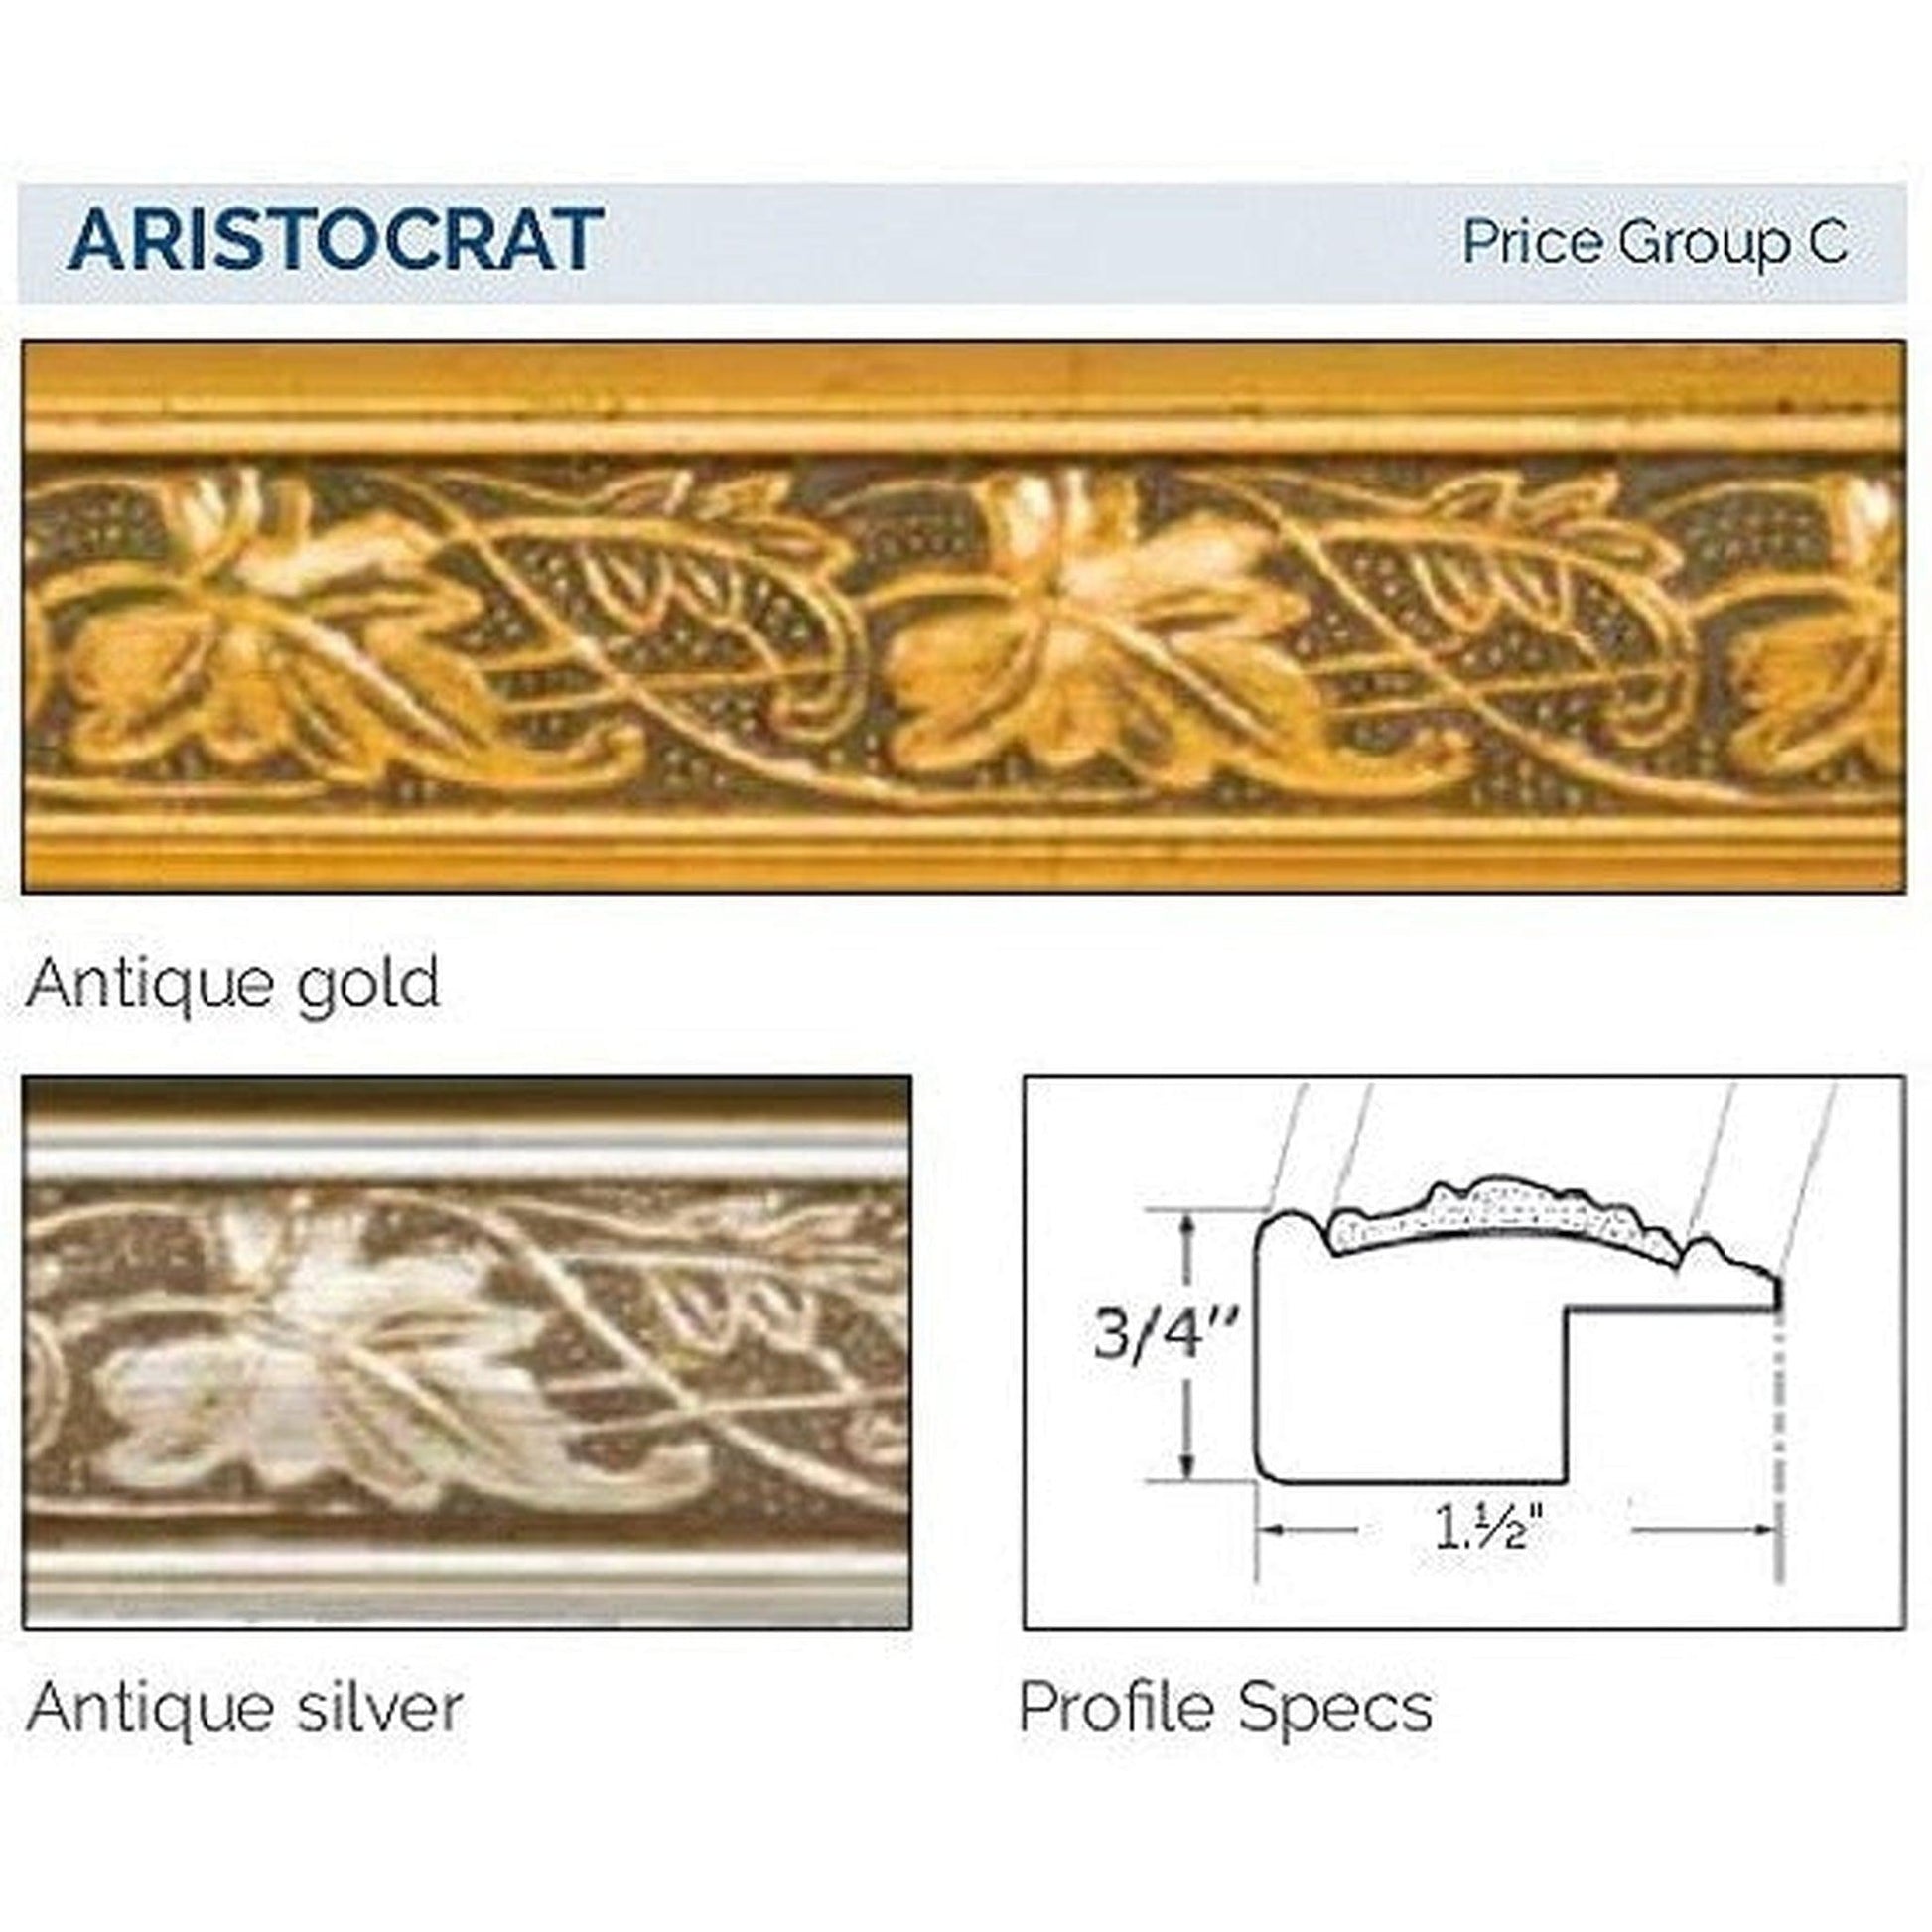 Afina Signature 24" x 36" Aristocrat Antique Silver Recessed Reversible Hinged Single Door Medicine Cabinet With Beveled Edge Mirror